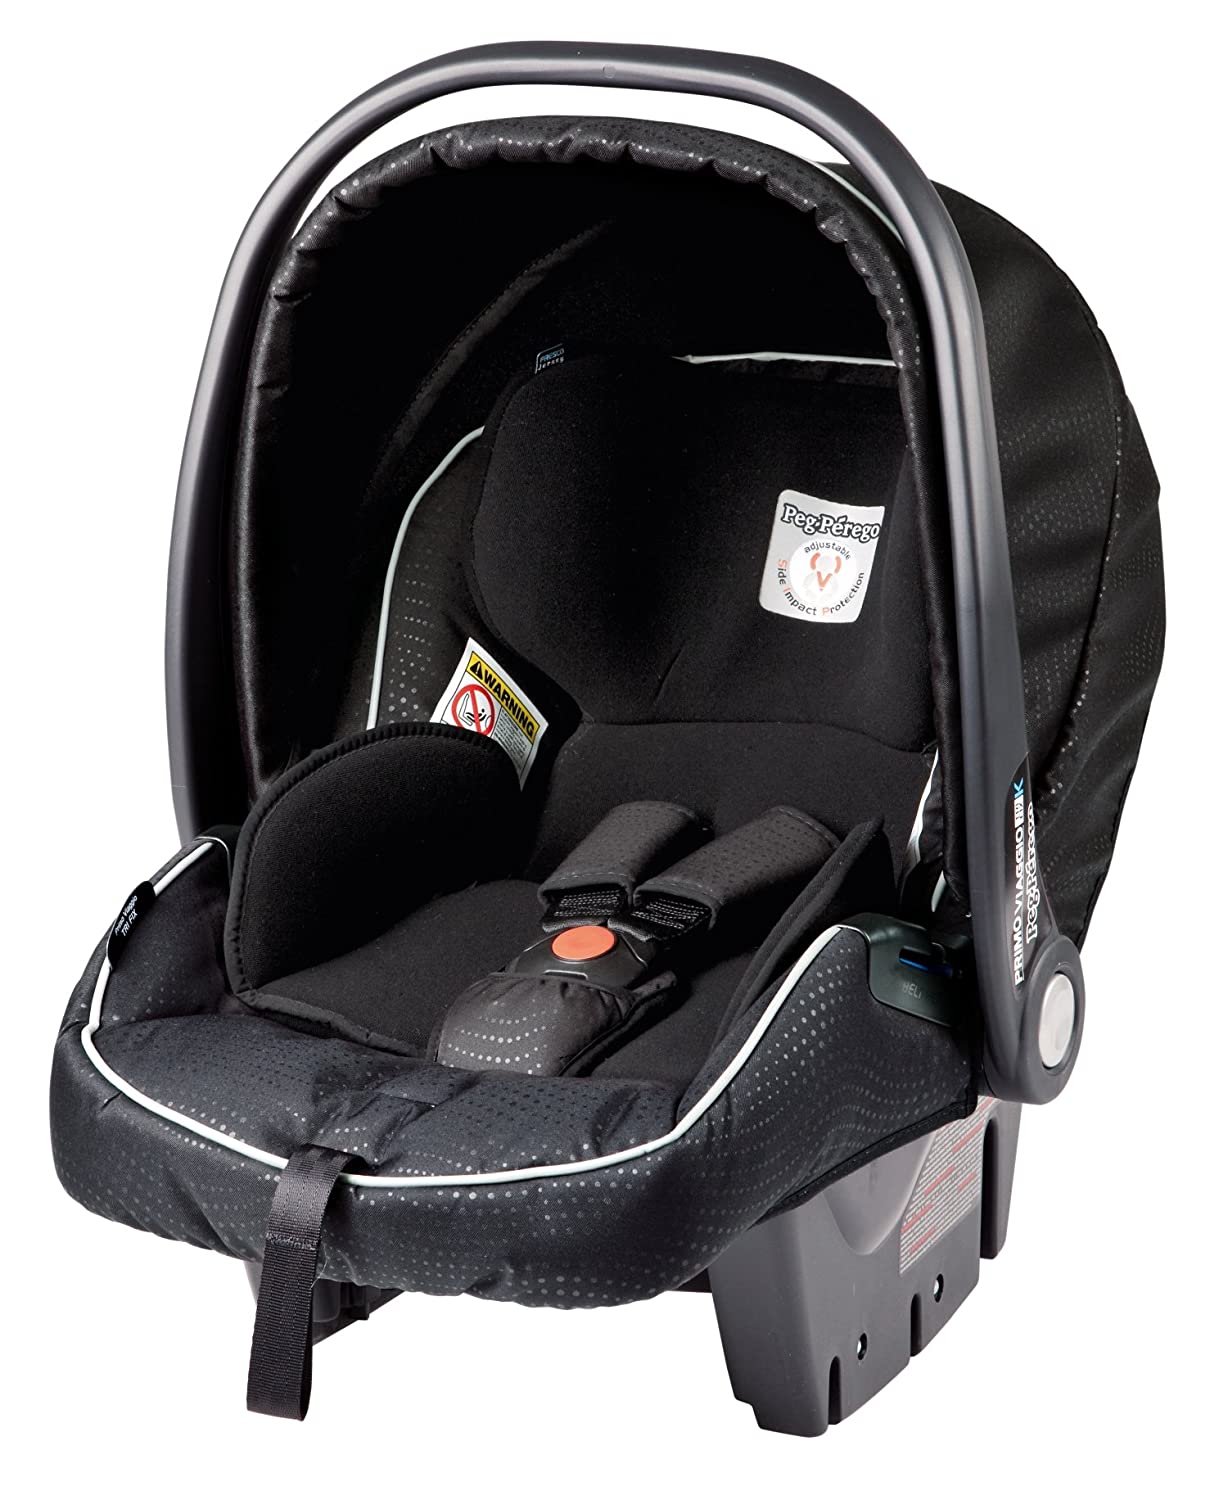 Peg Perego Primo Viaggio Tri Baby Seat (K Galaxy